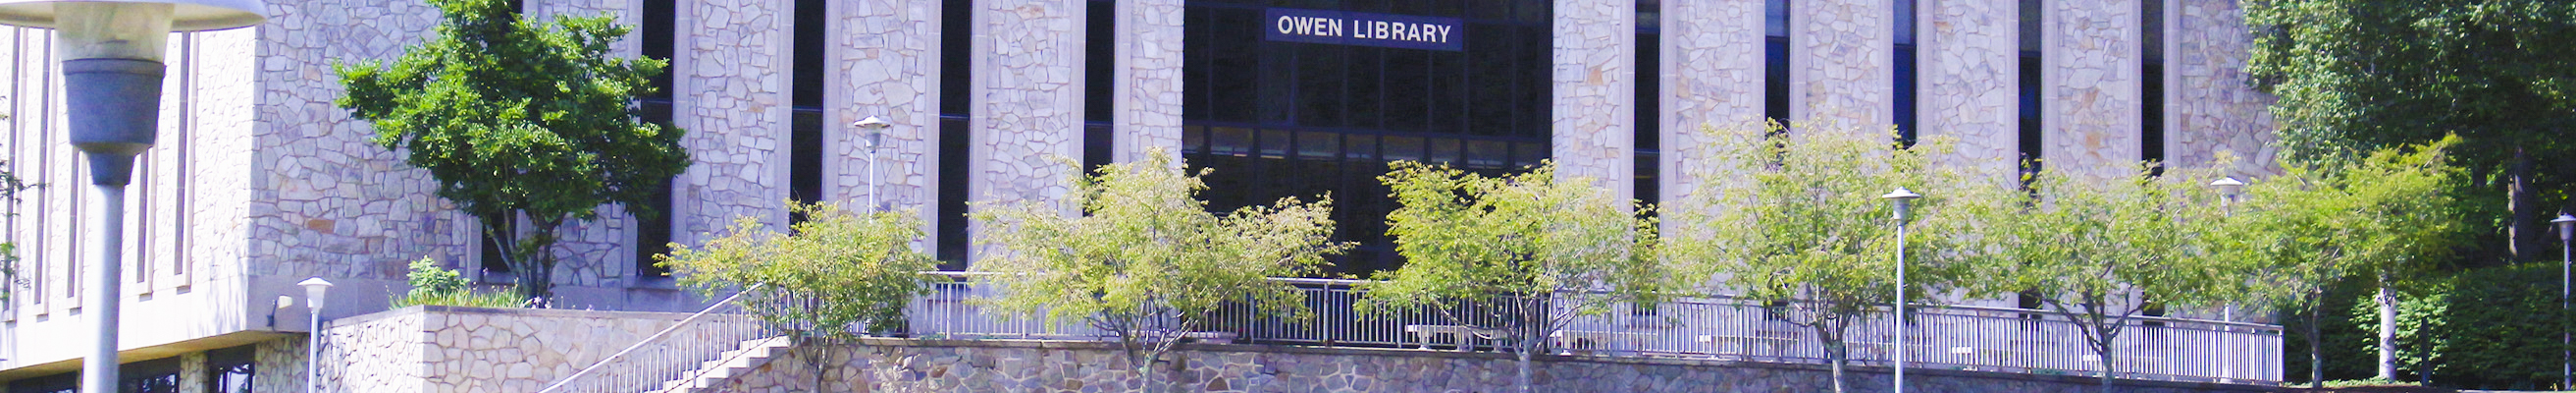 Owen Library Johnstown Campus